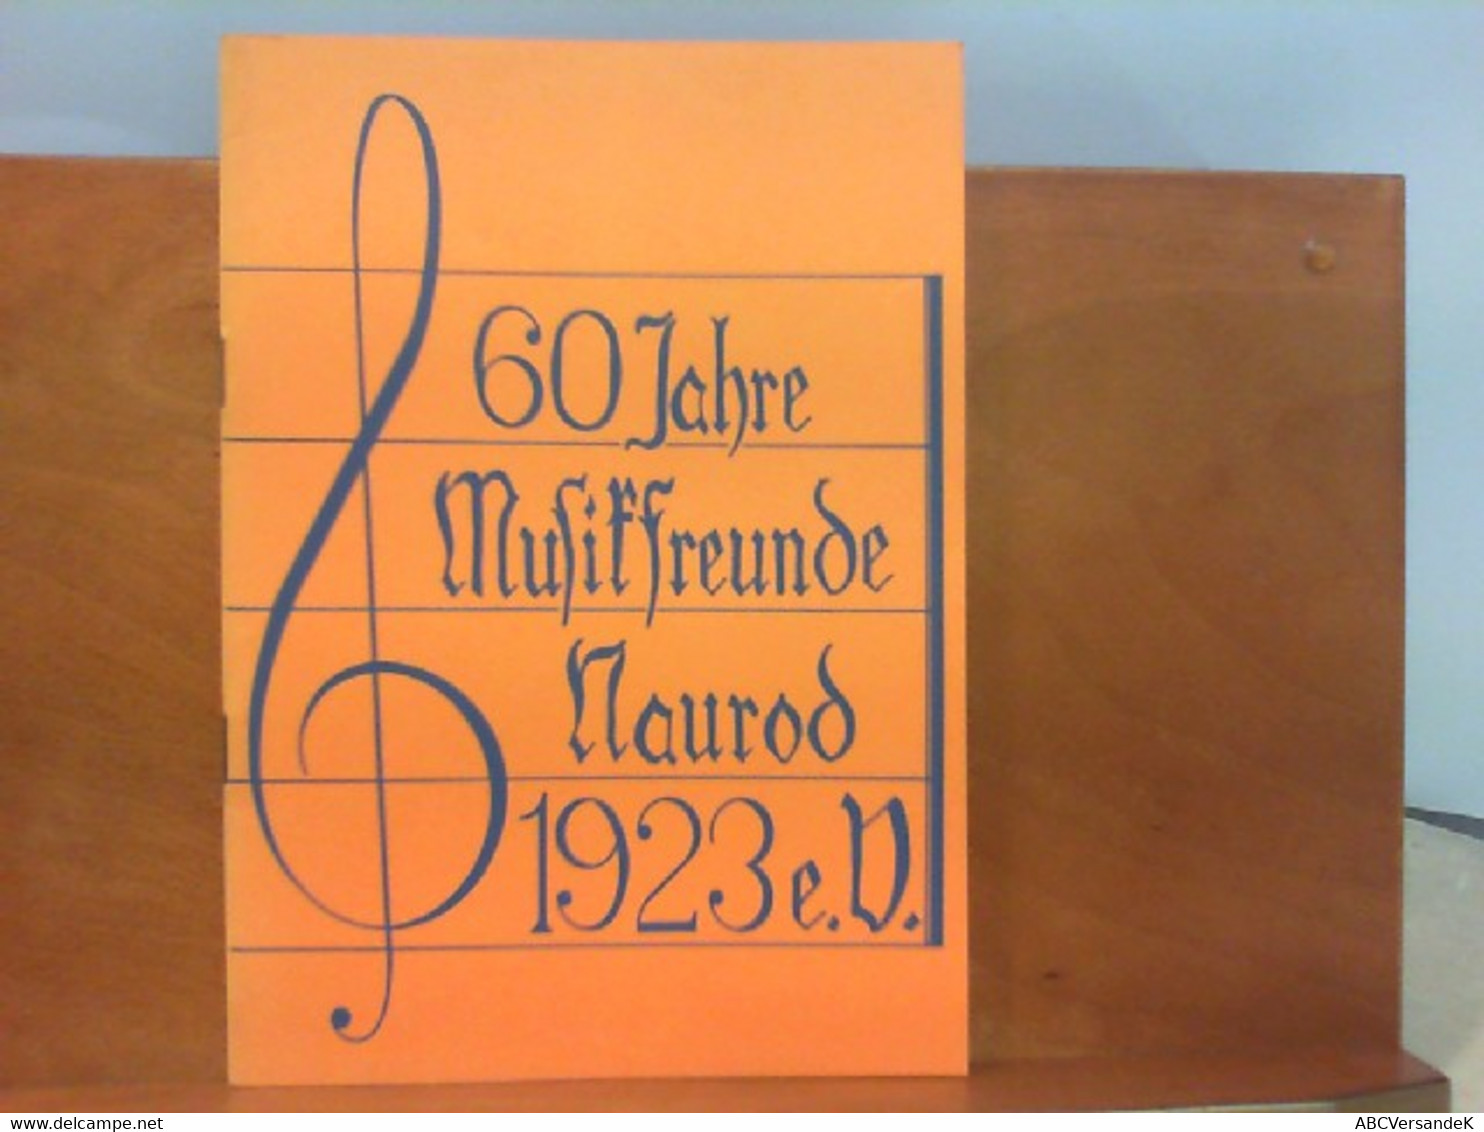 60 Jahre Musikfreunde Naurod 1923 E. V. - Hesse